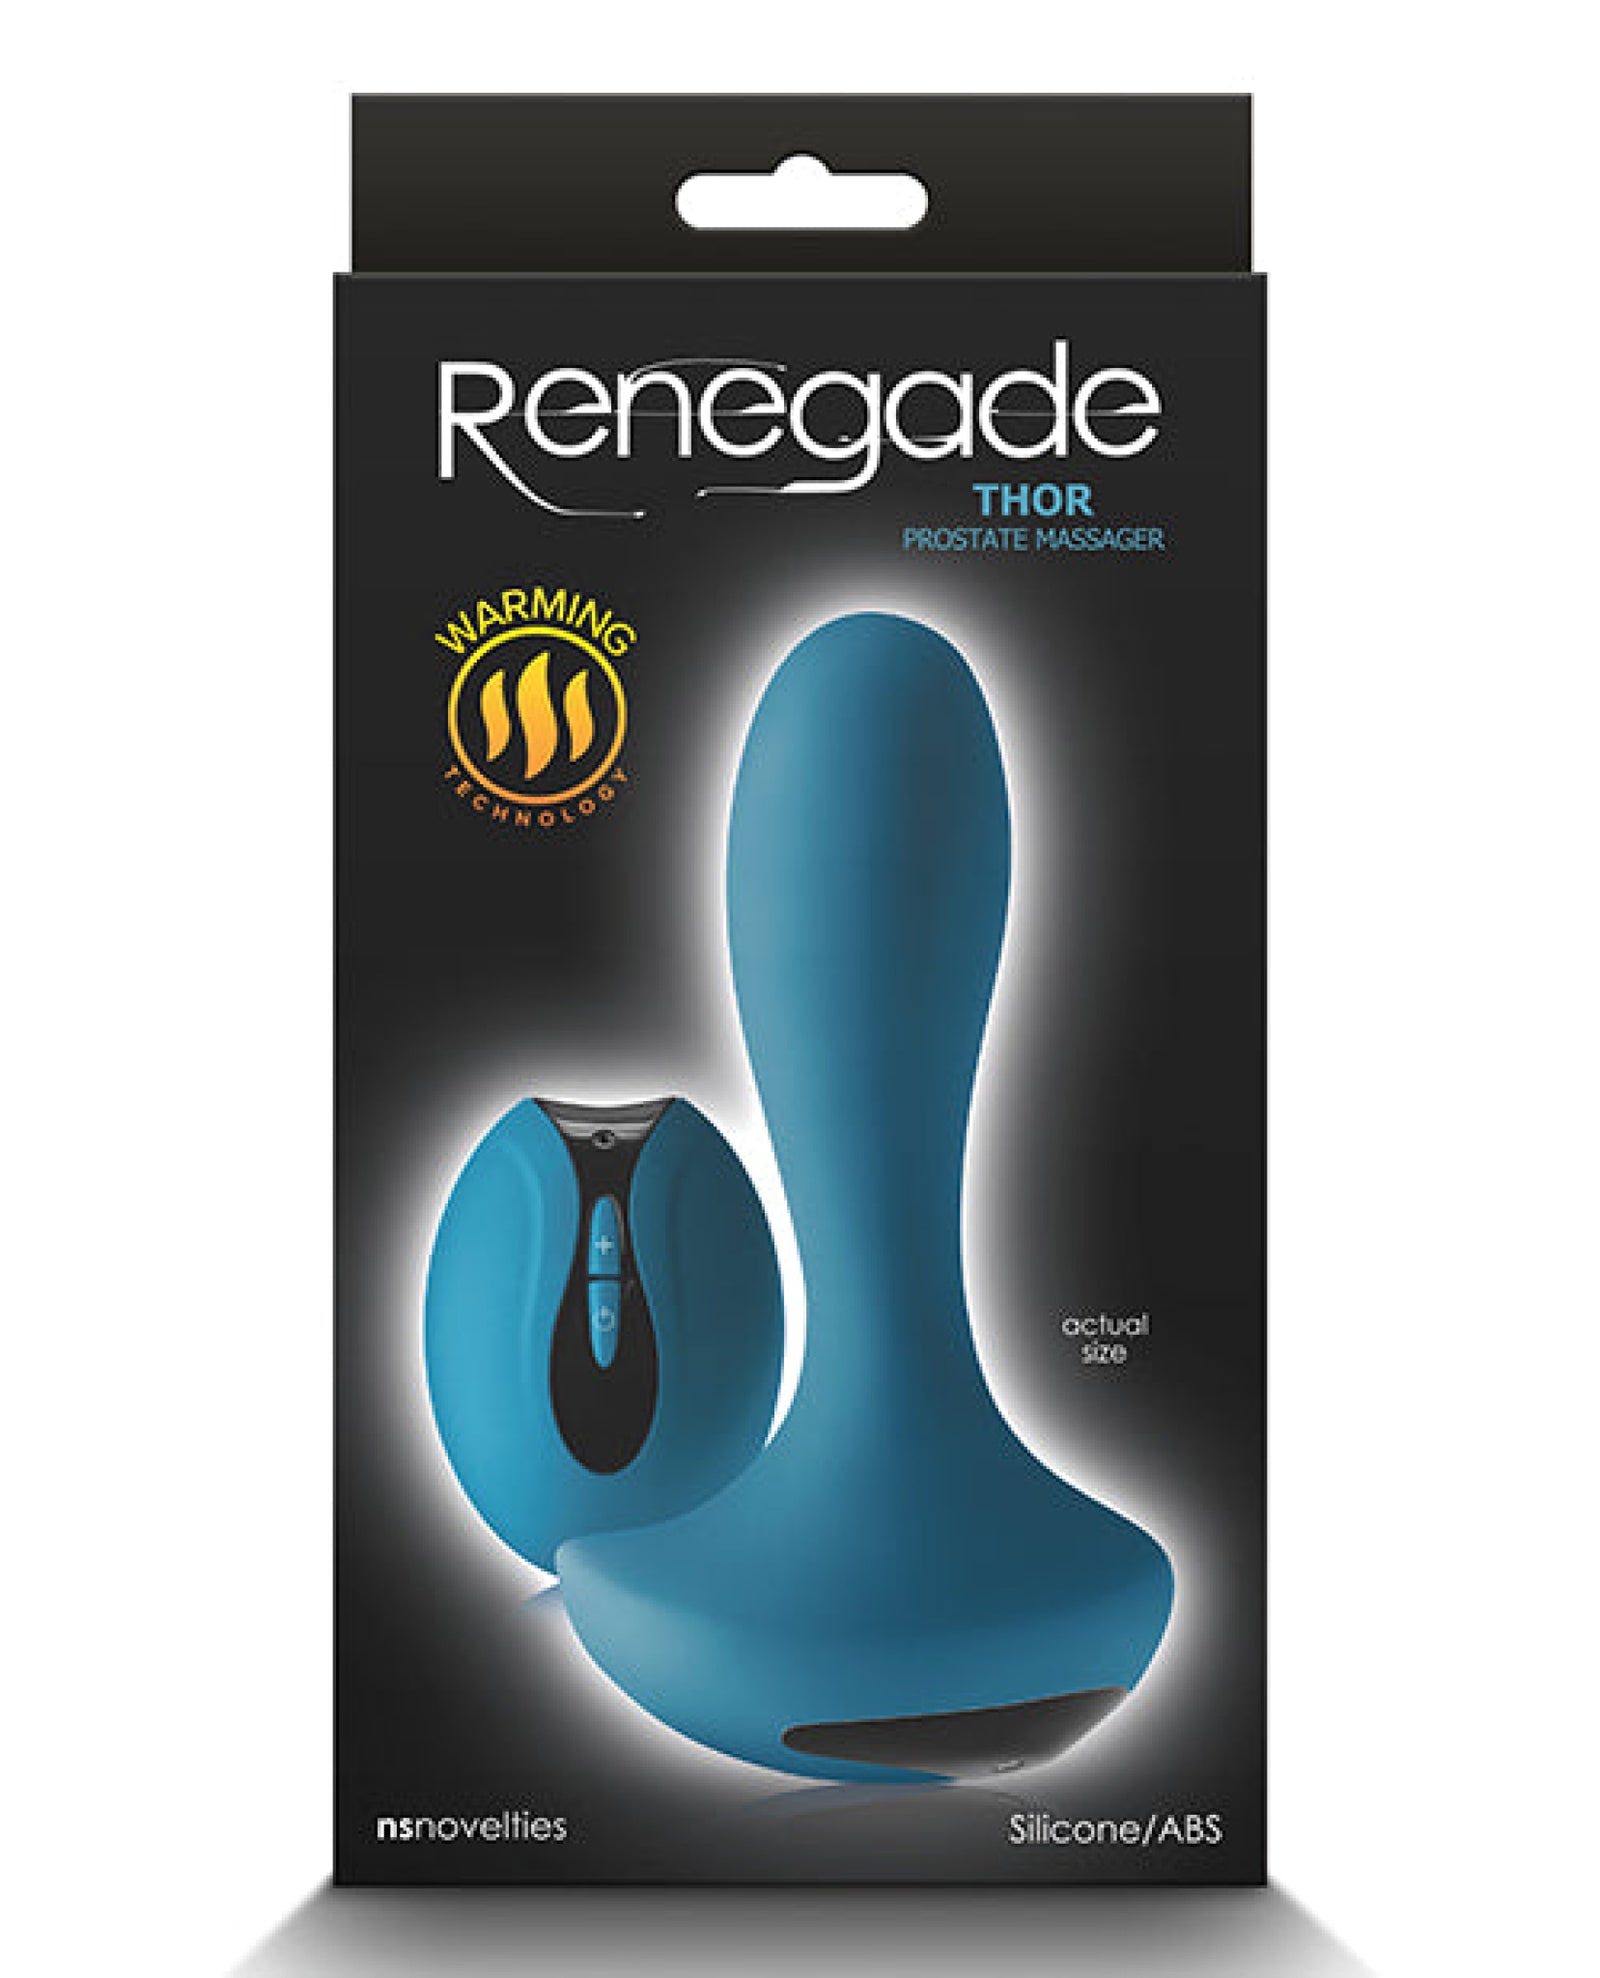 Renegade Thor Prostate Massager W-remote - Teal Renegade